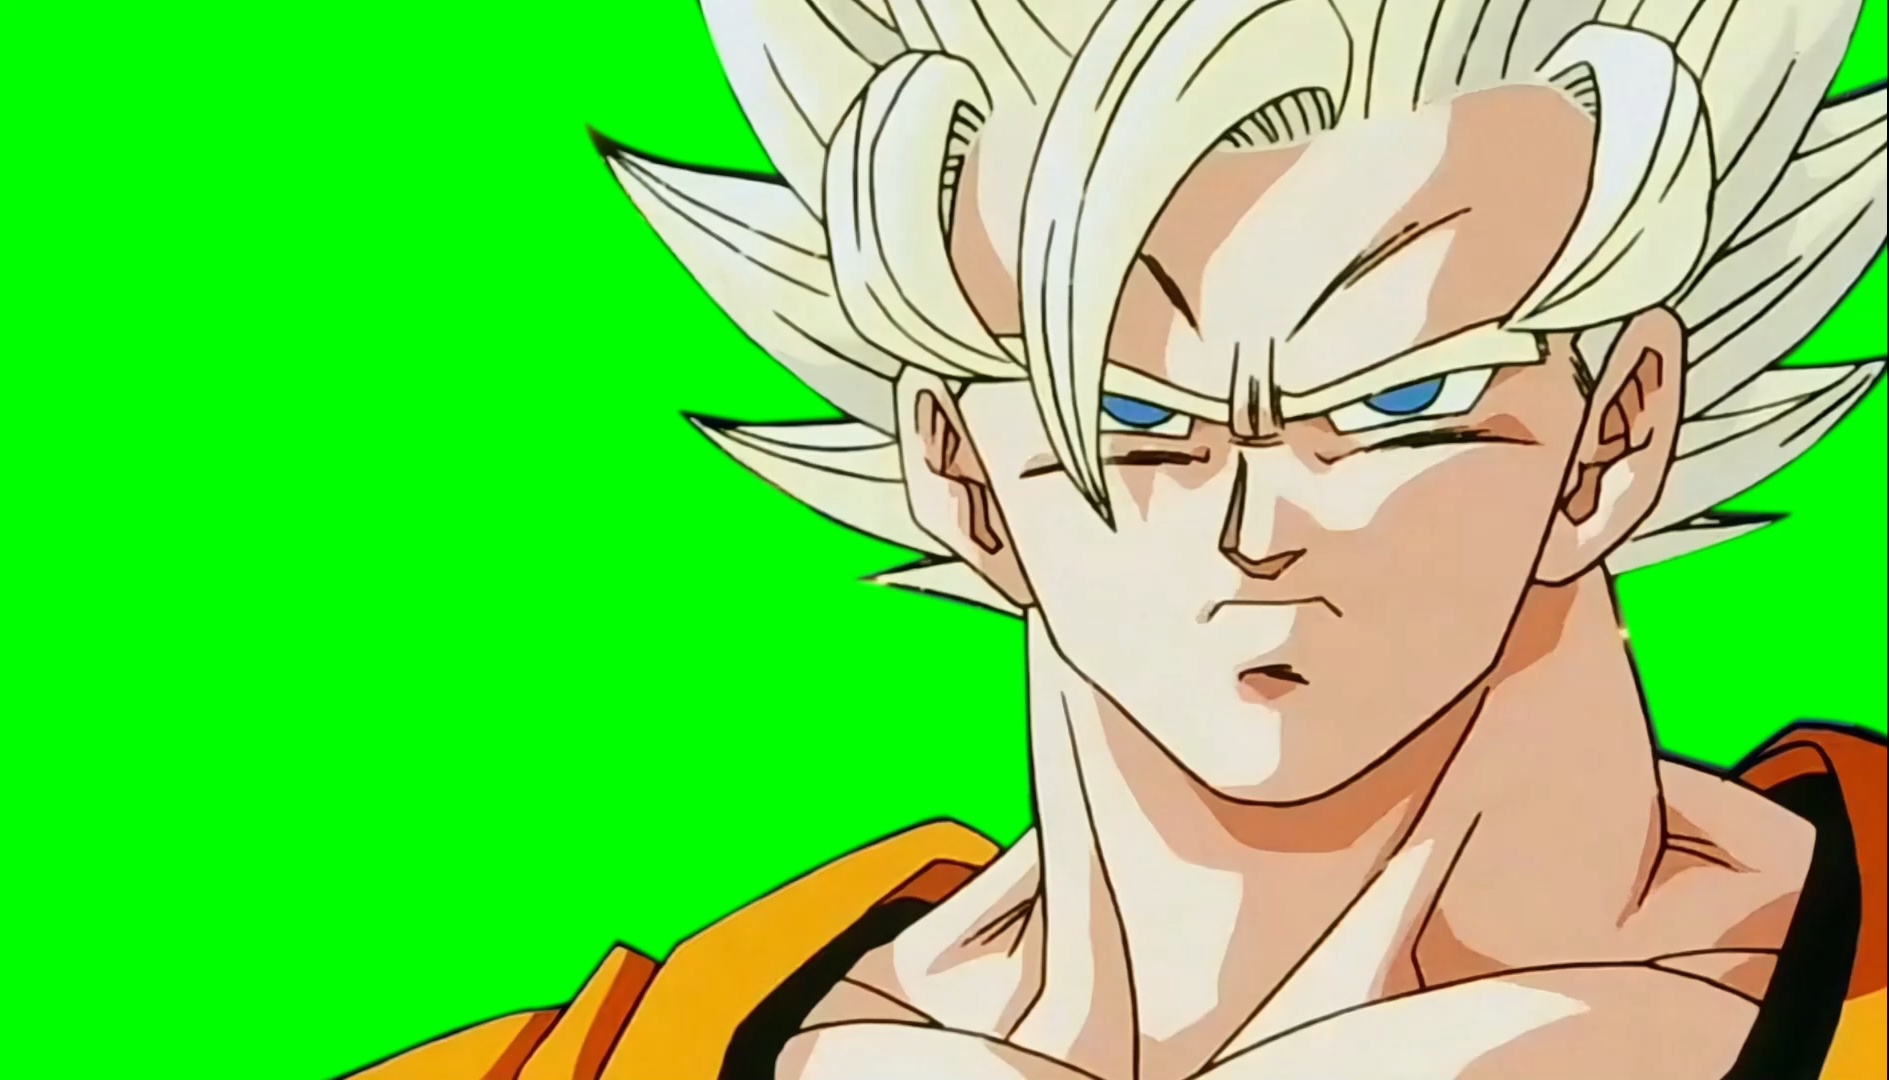 Goku staring at Buu meme - Dragon Ball Z (Green Screen)